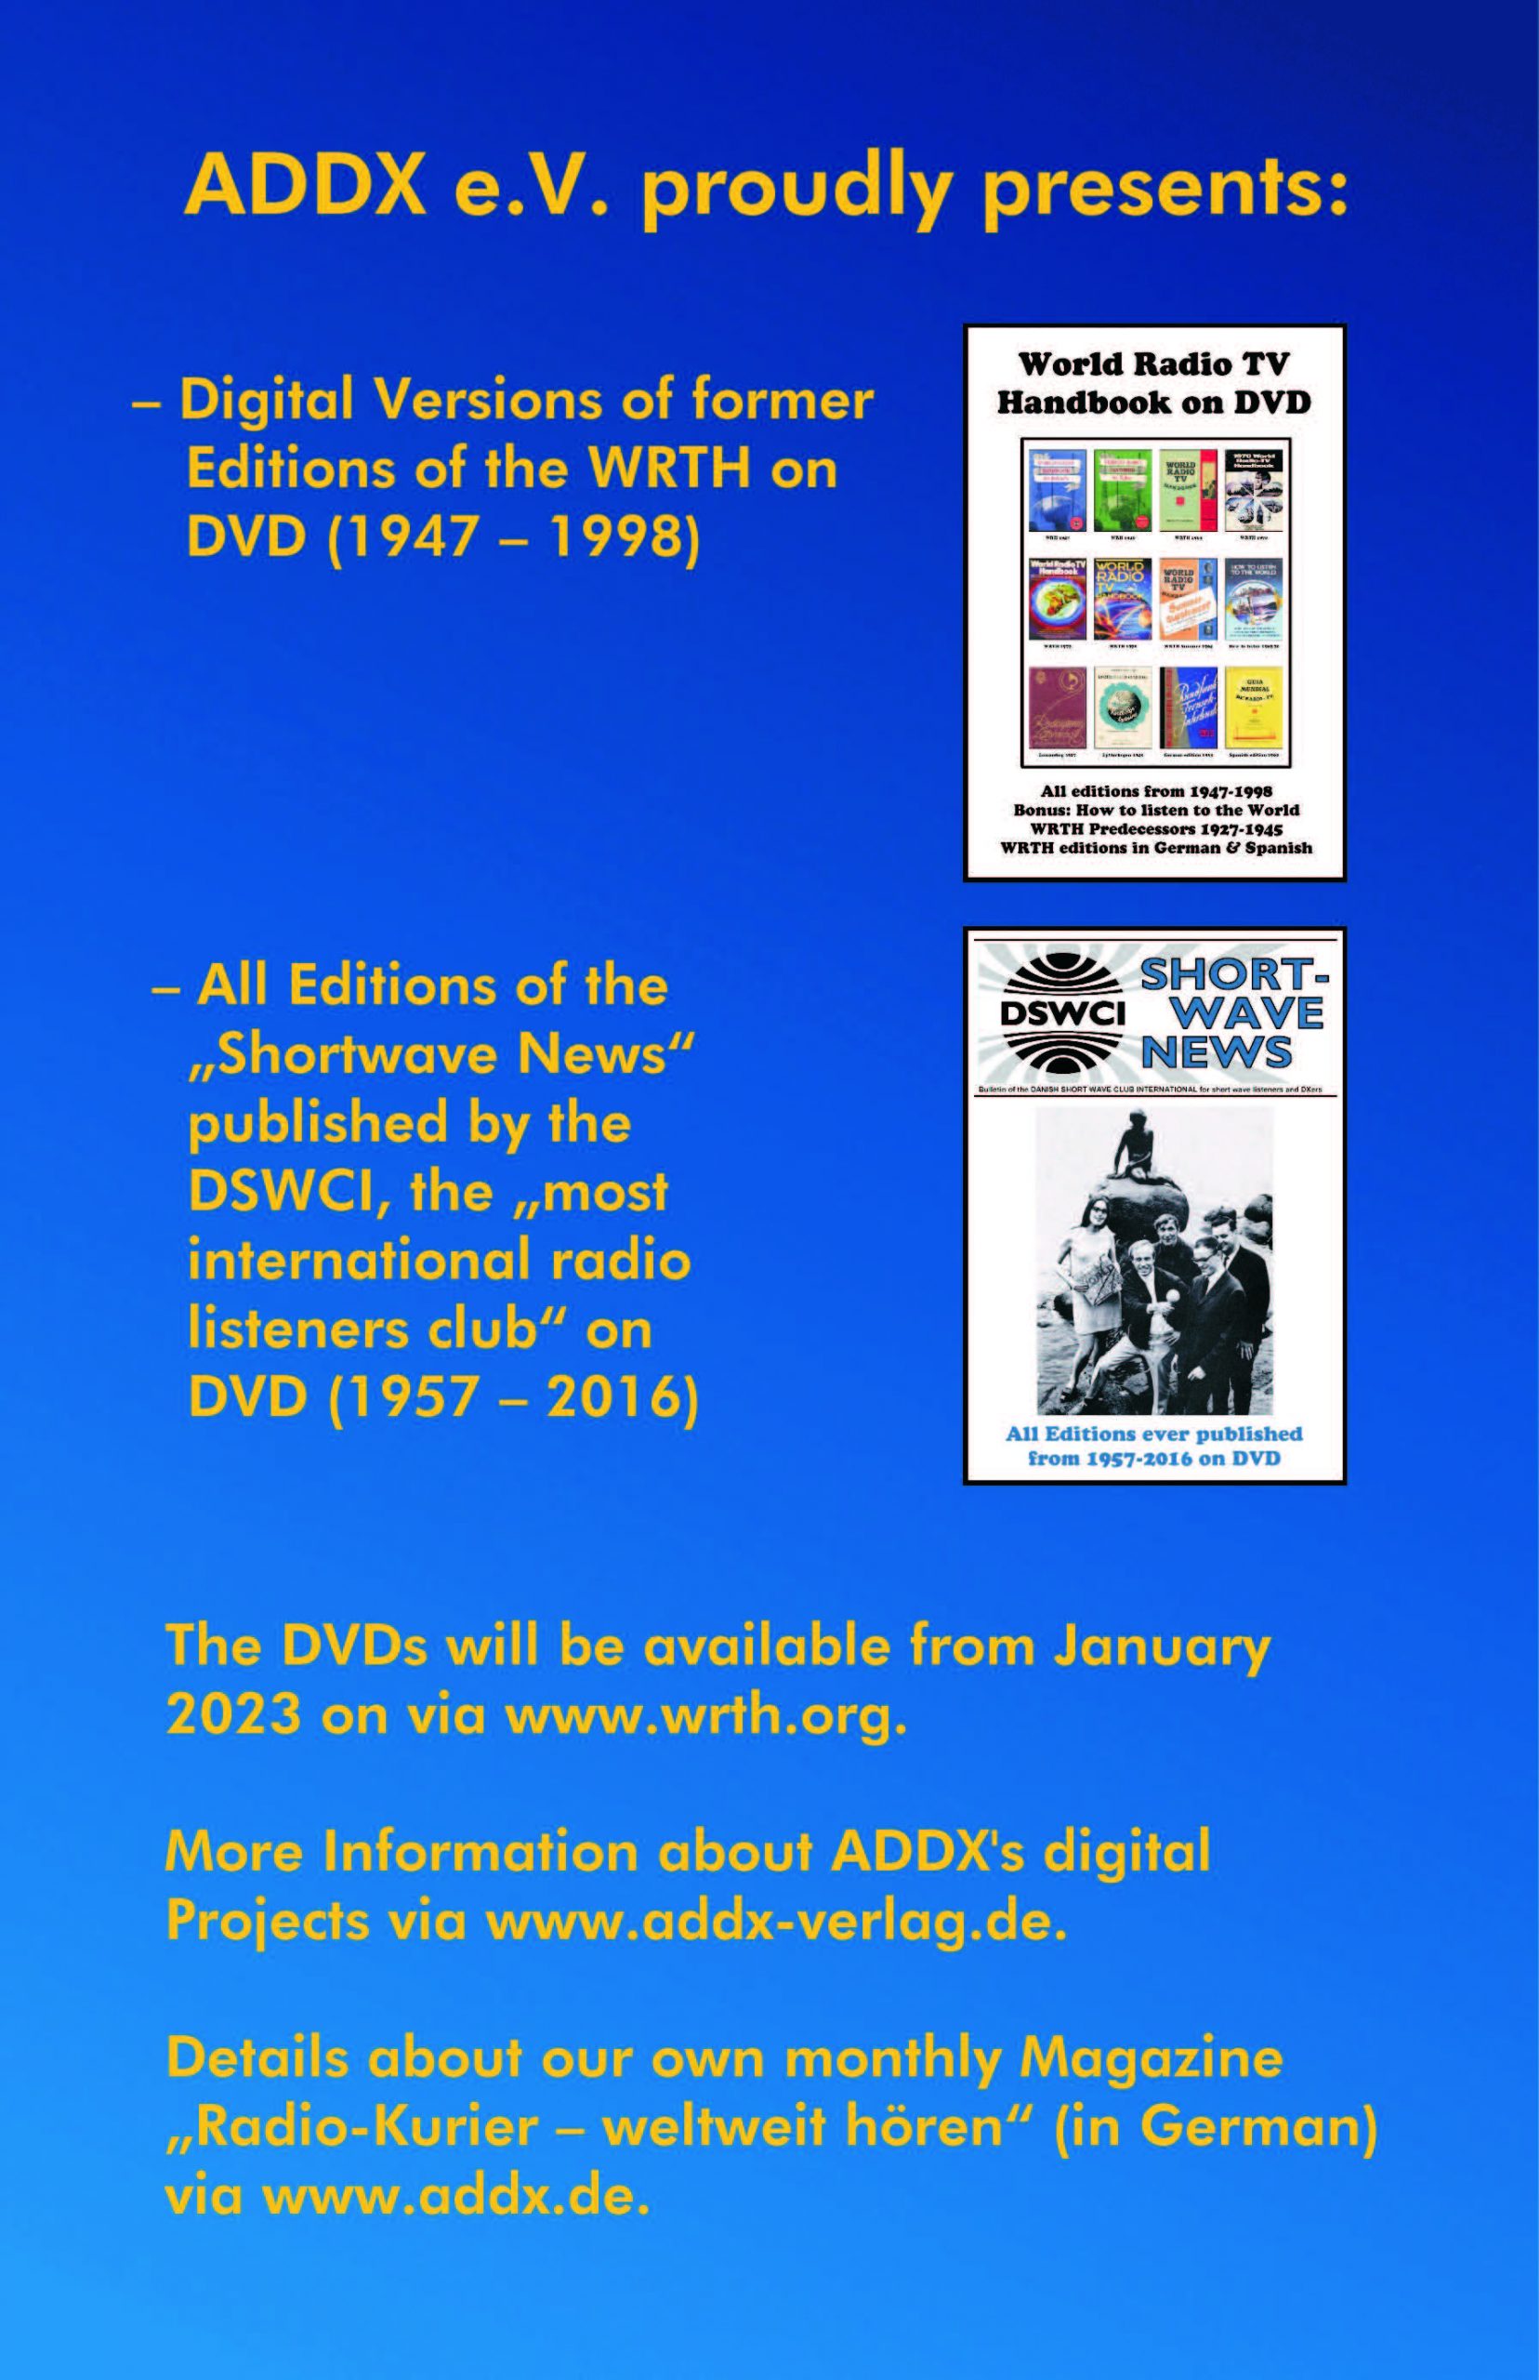 Advertising for ADDX, a digital publishing association